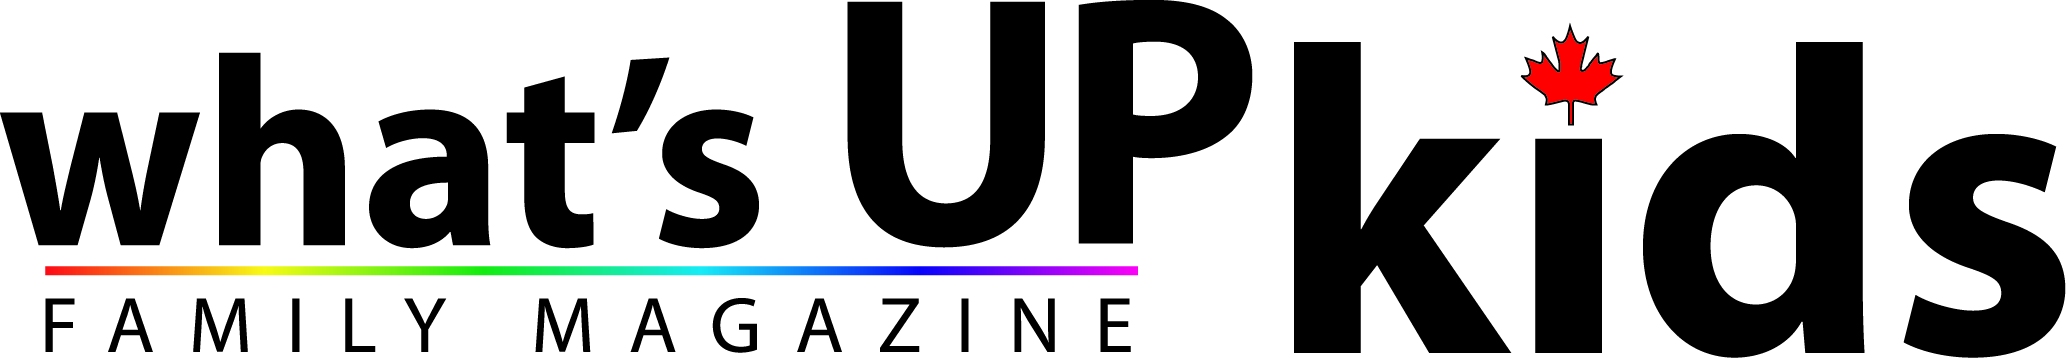 What's Up Kids Magazine Logo